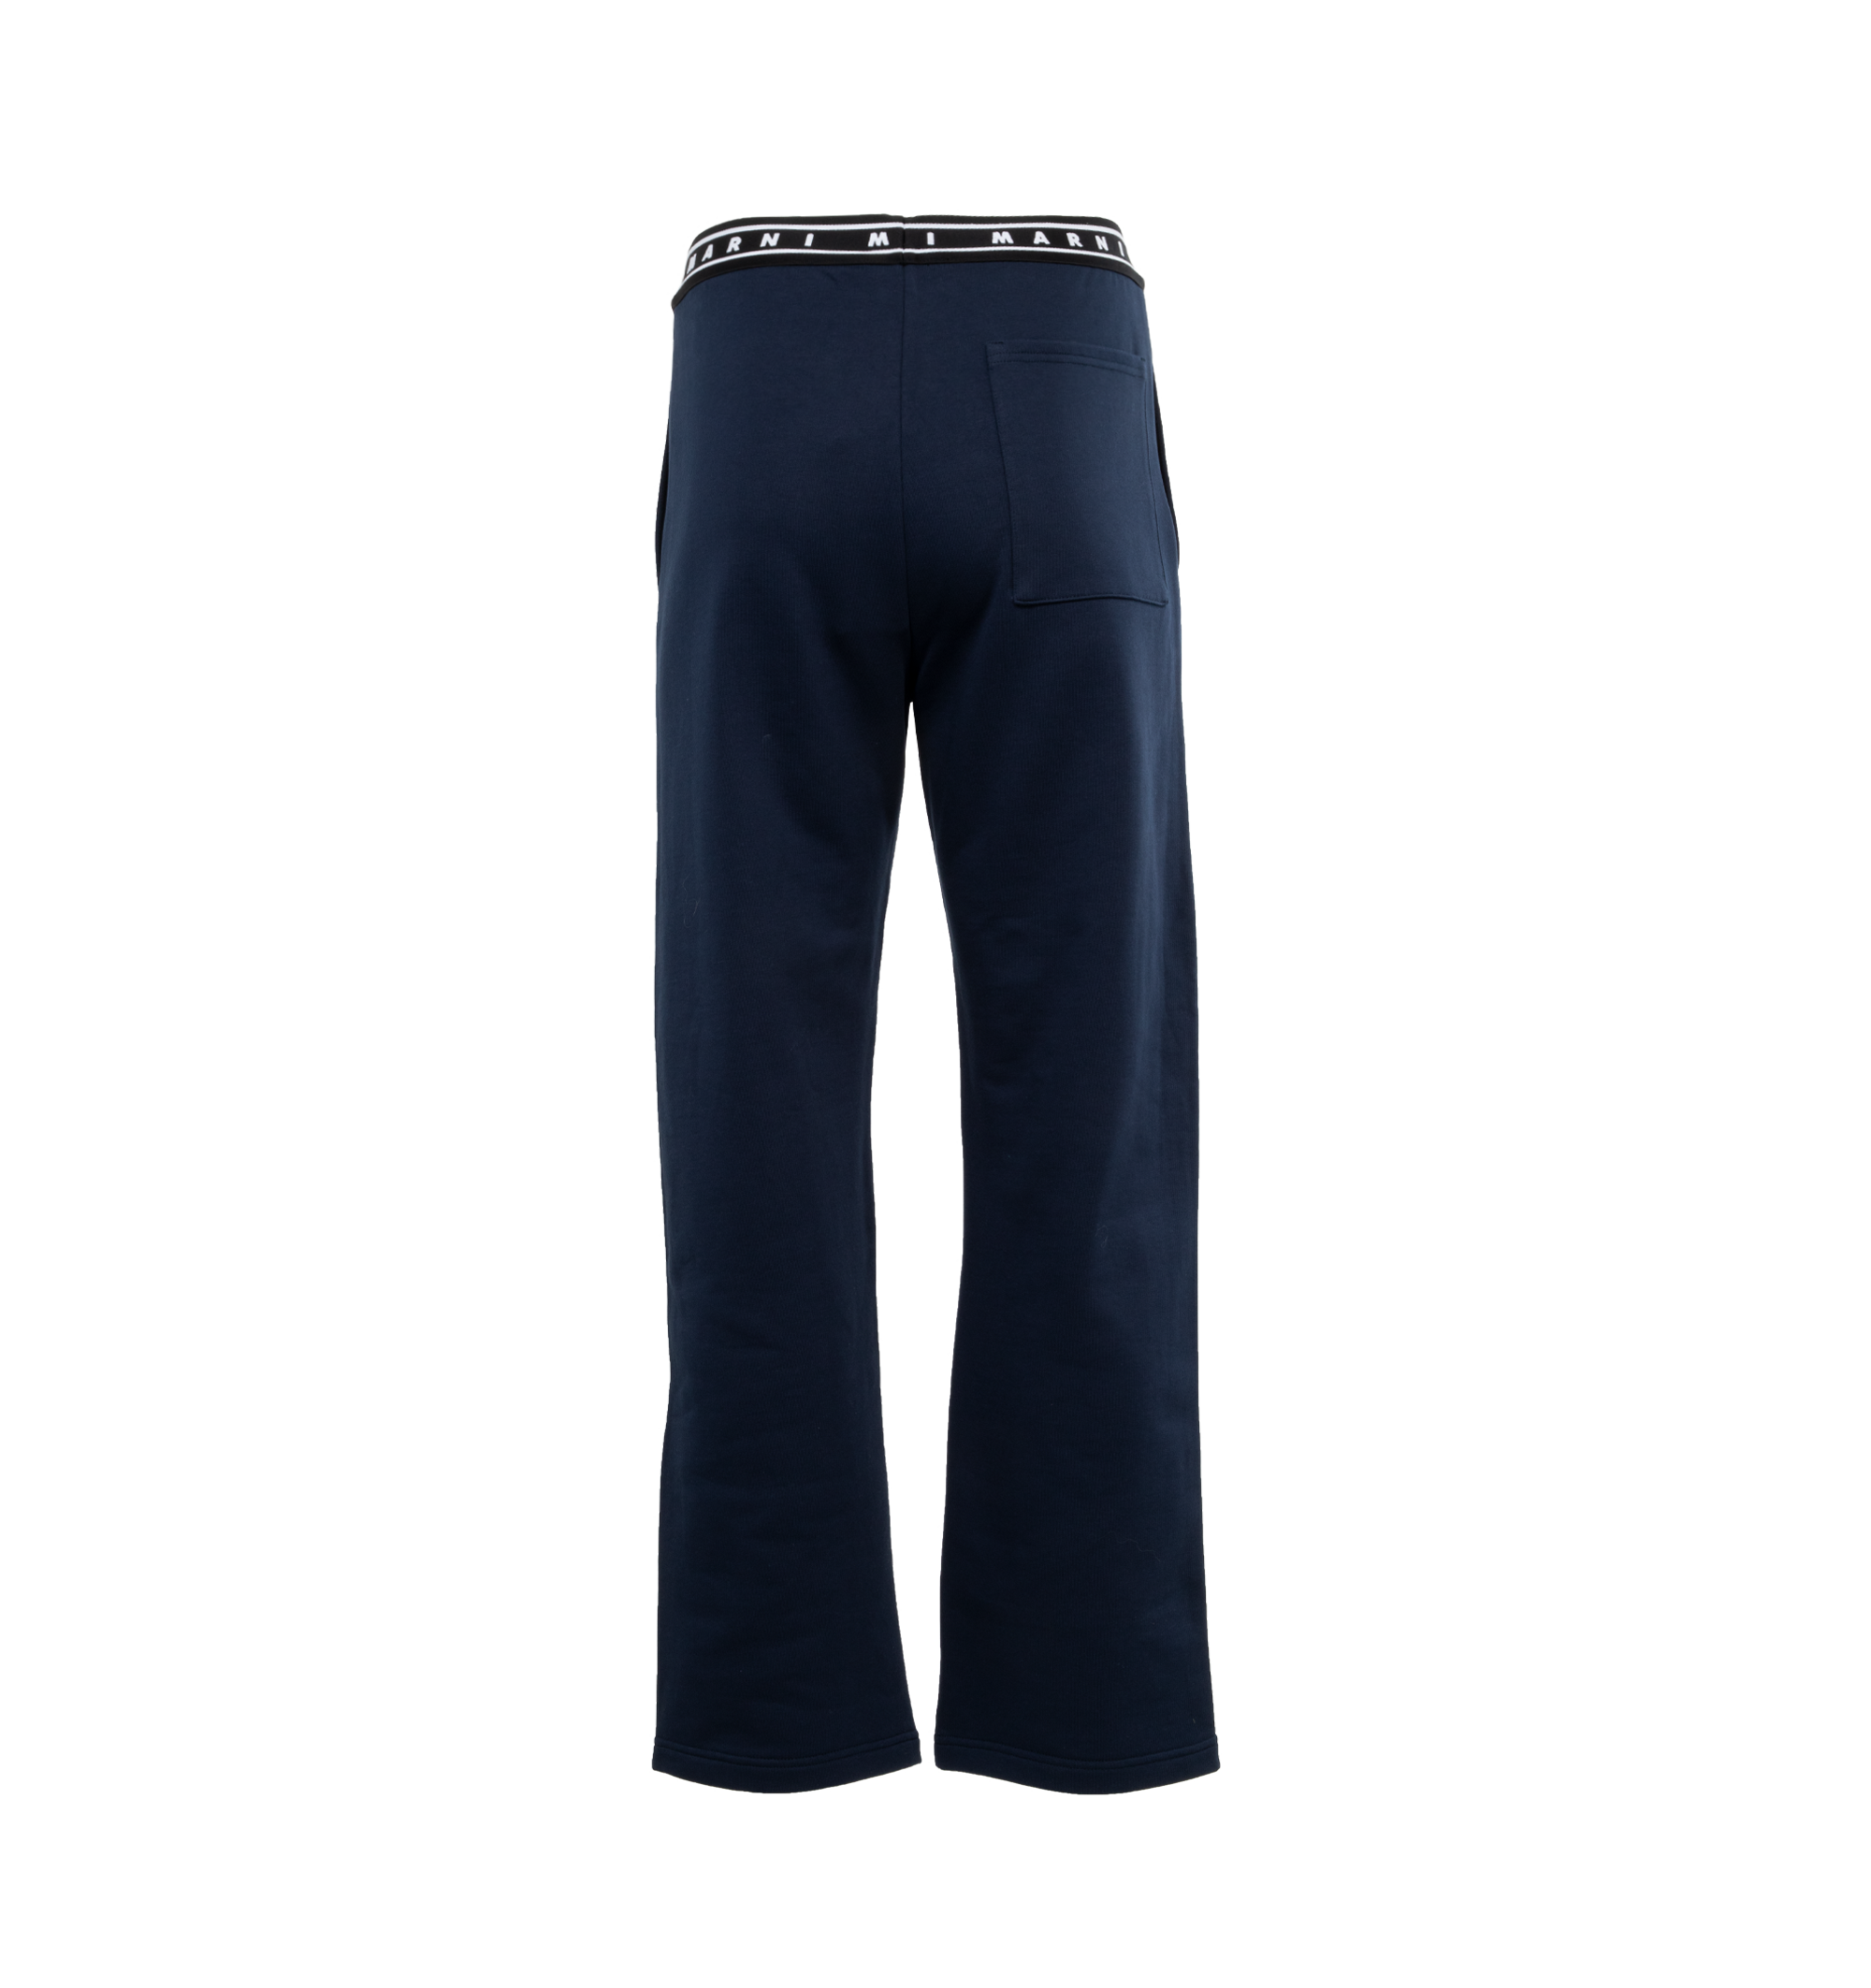 Buy Les Deux Sterling Track Pants Black/Ivory - Scandinavian Fashion Store